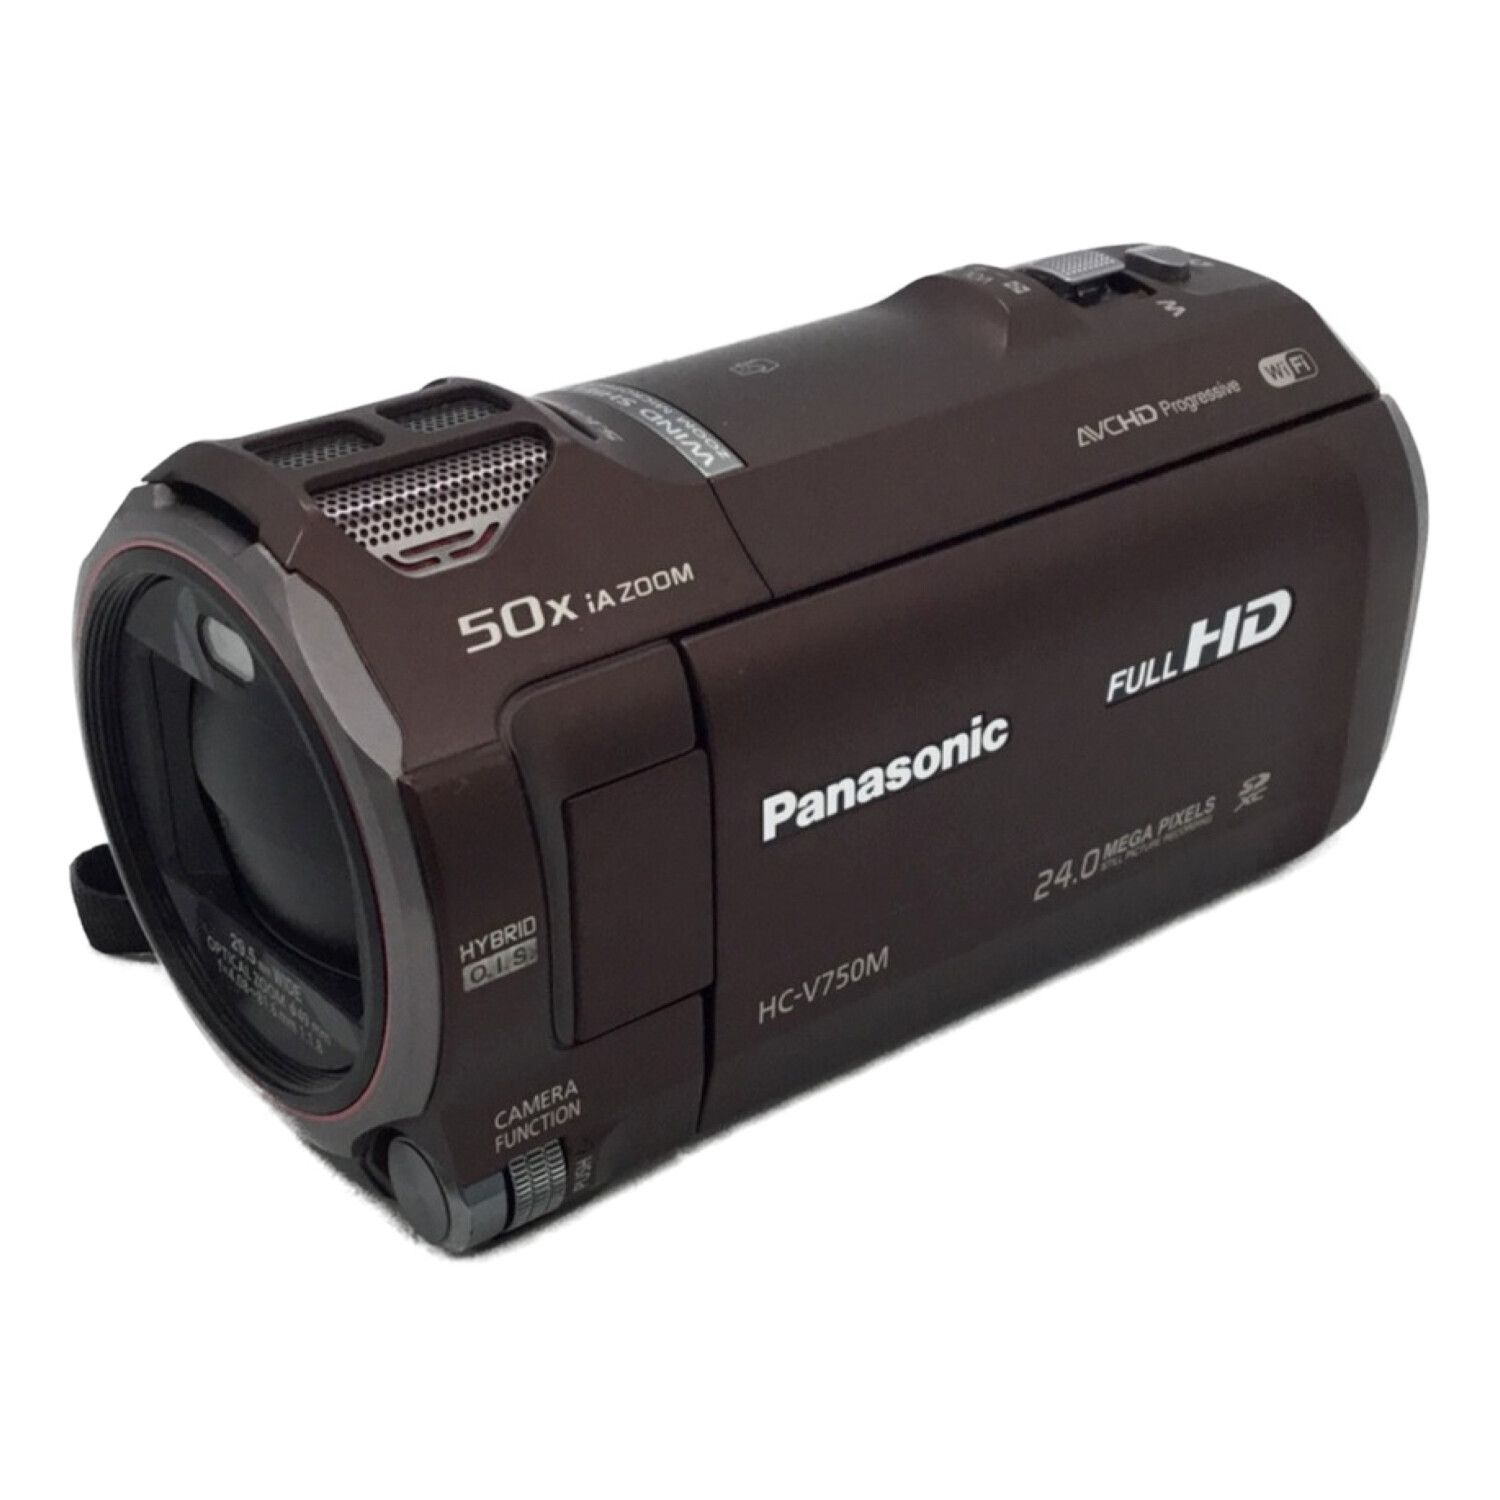 Panasonic (パナソニック) SDカードビデオカメラ 1276万画素 SDXC 